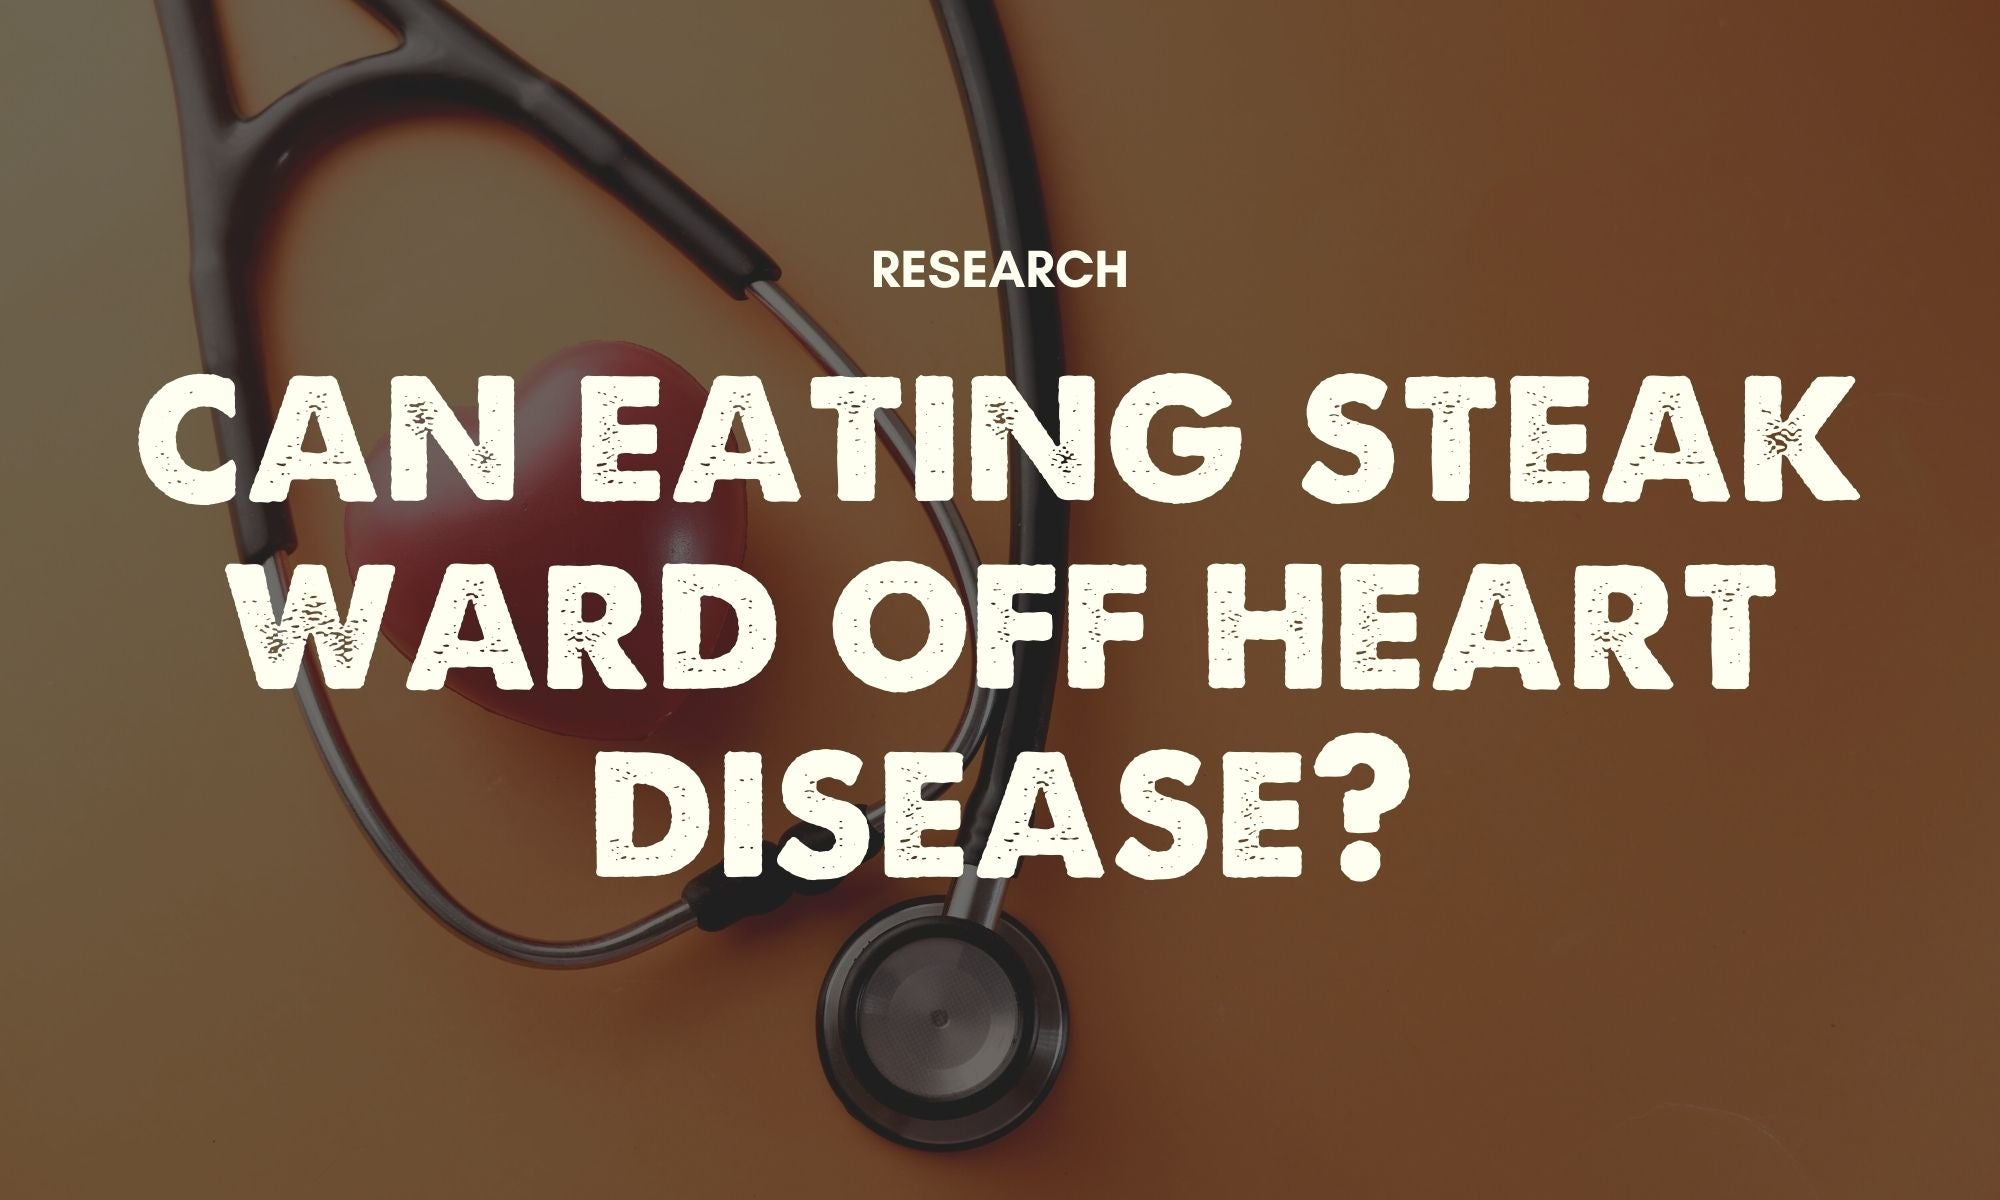 Consuming Steak May Ward Off Heart Disease?